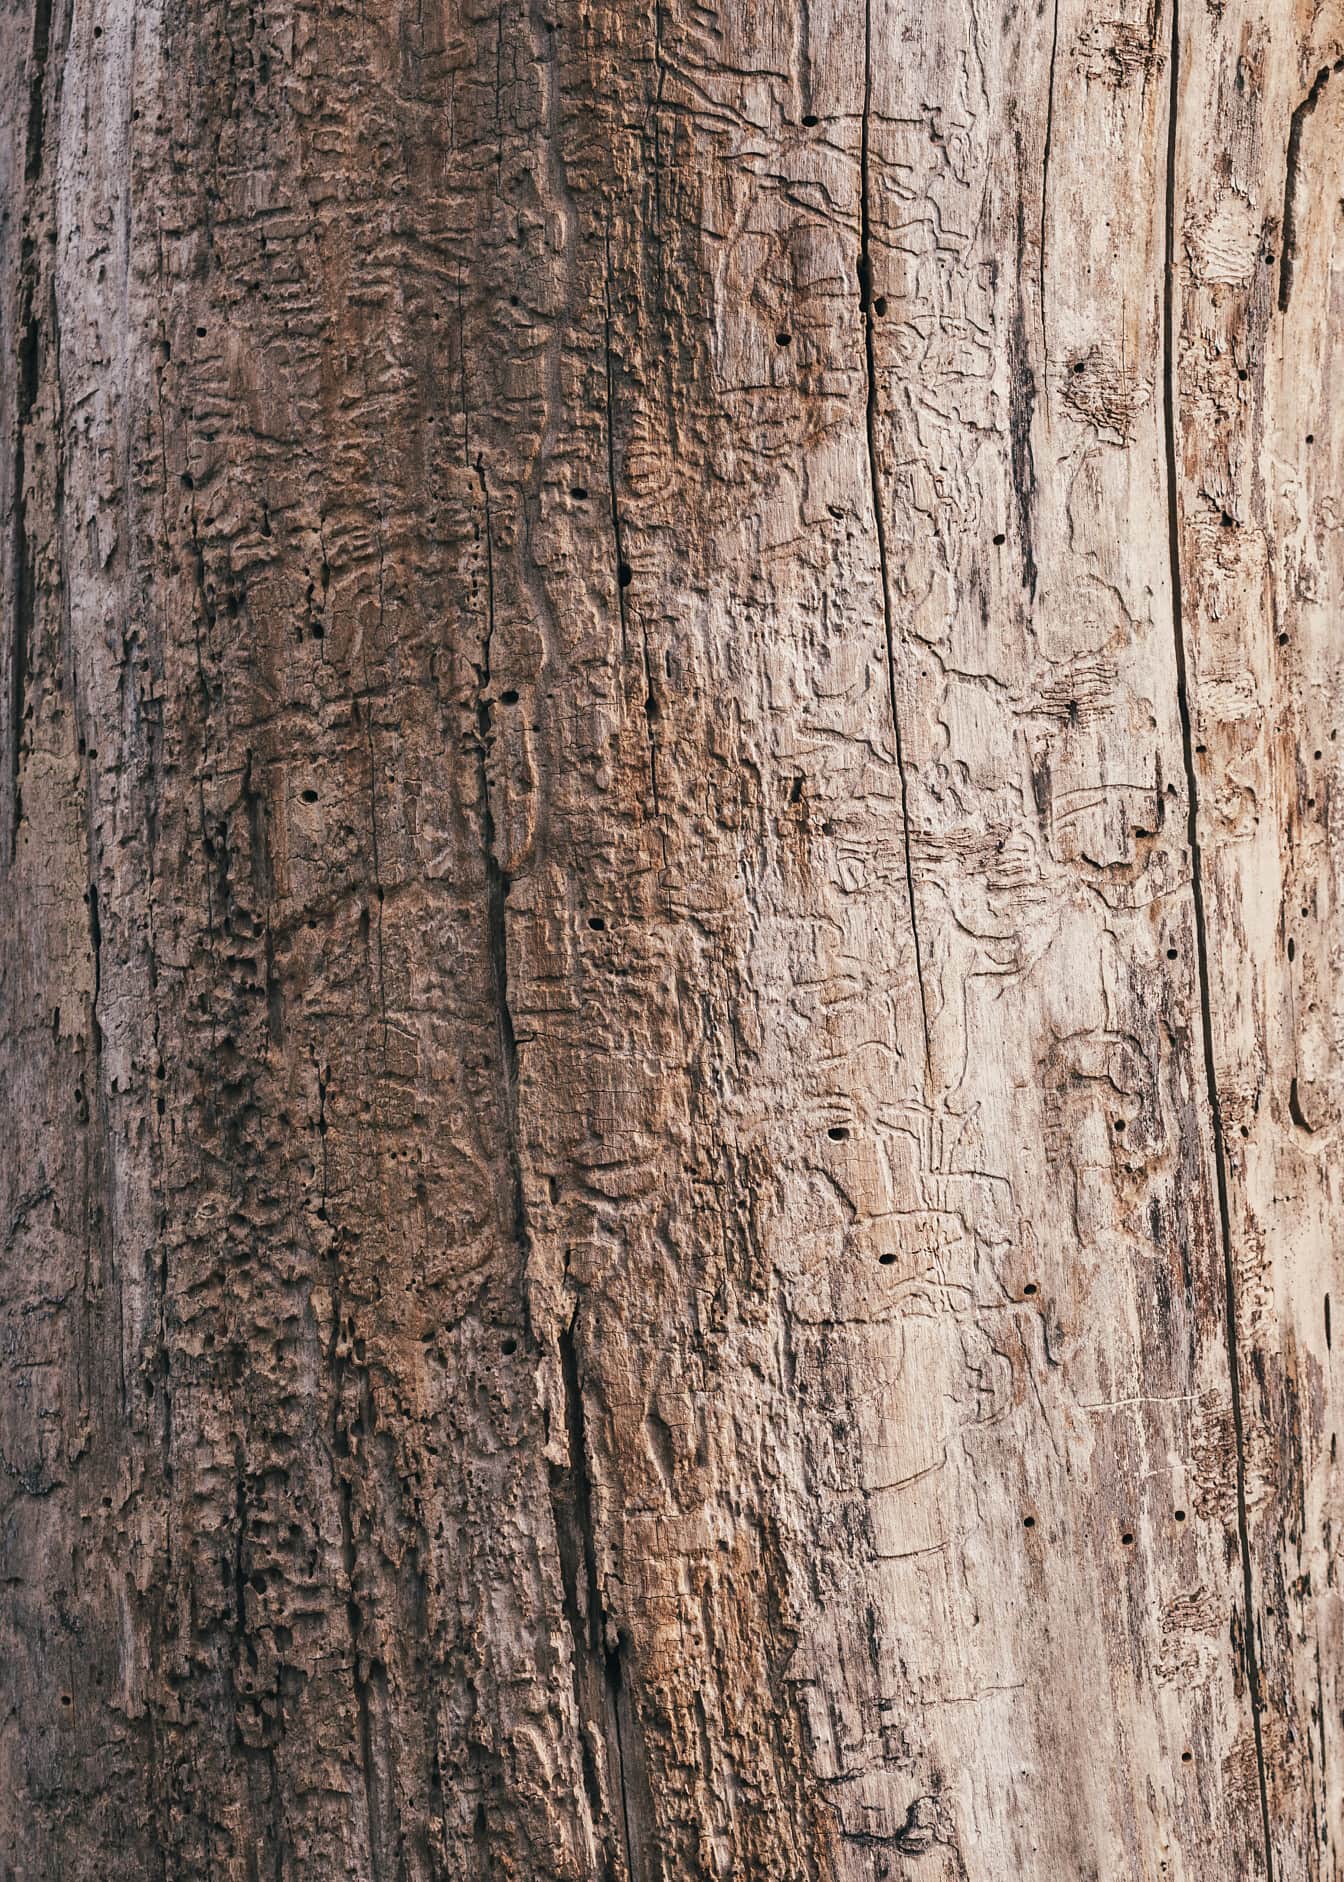 Detailní textura hnědého kmene stromu s hrubým suchým vzorem